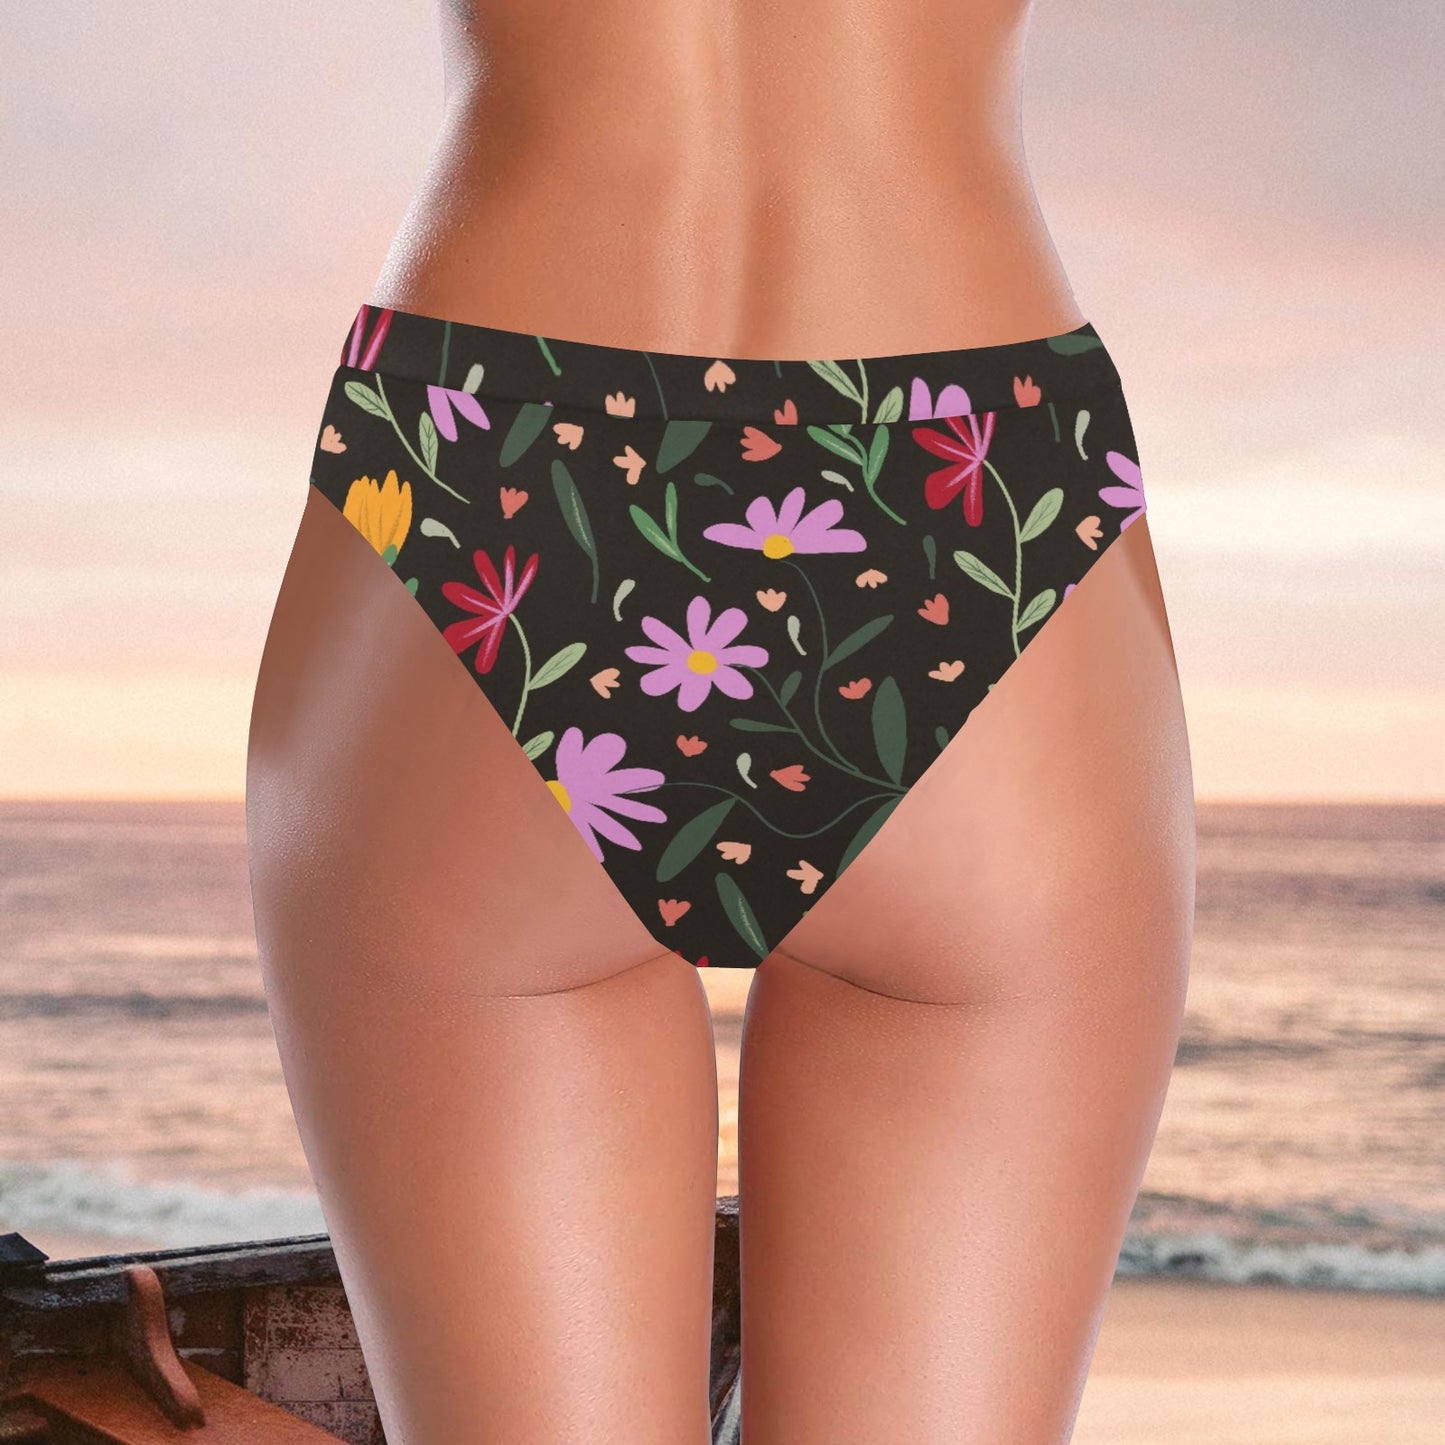 Botanical Flowers High-Waisted High-Cut Bikini Bottom. Pattern hand-painted by the Designer Maria Alejandra Echenique